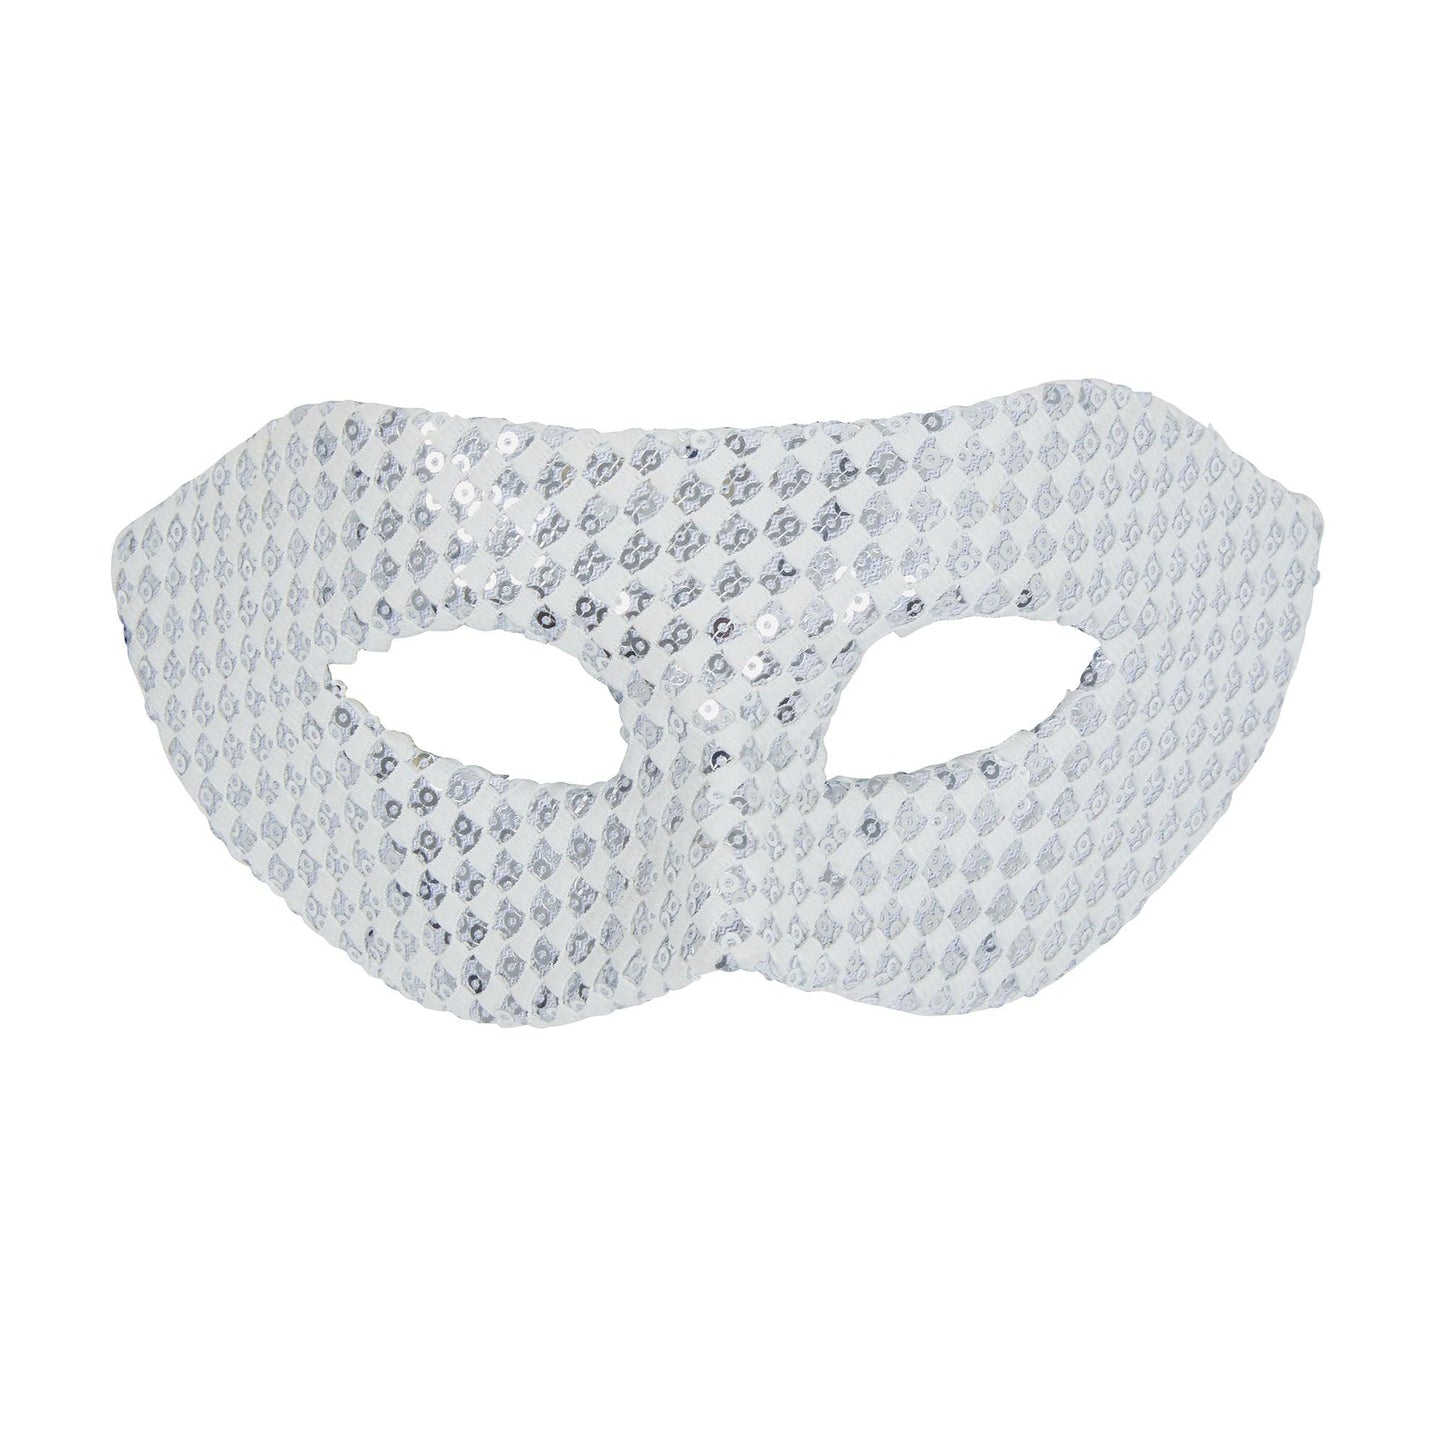 Sequin Eyemask White - Labreeze